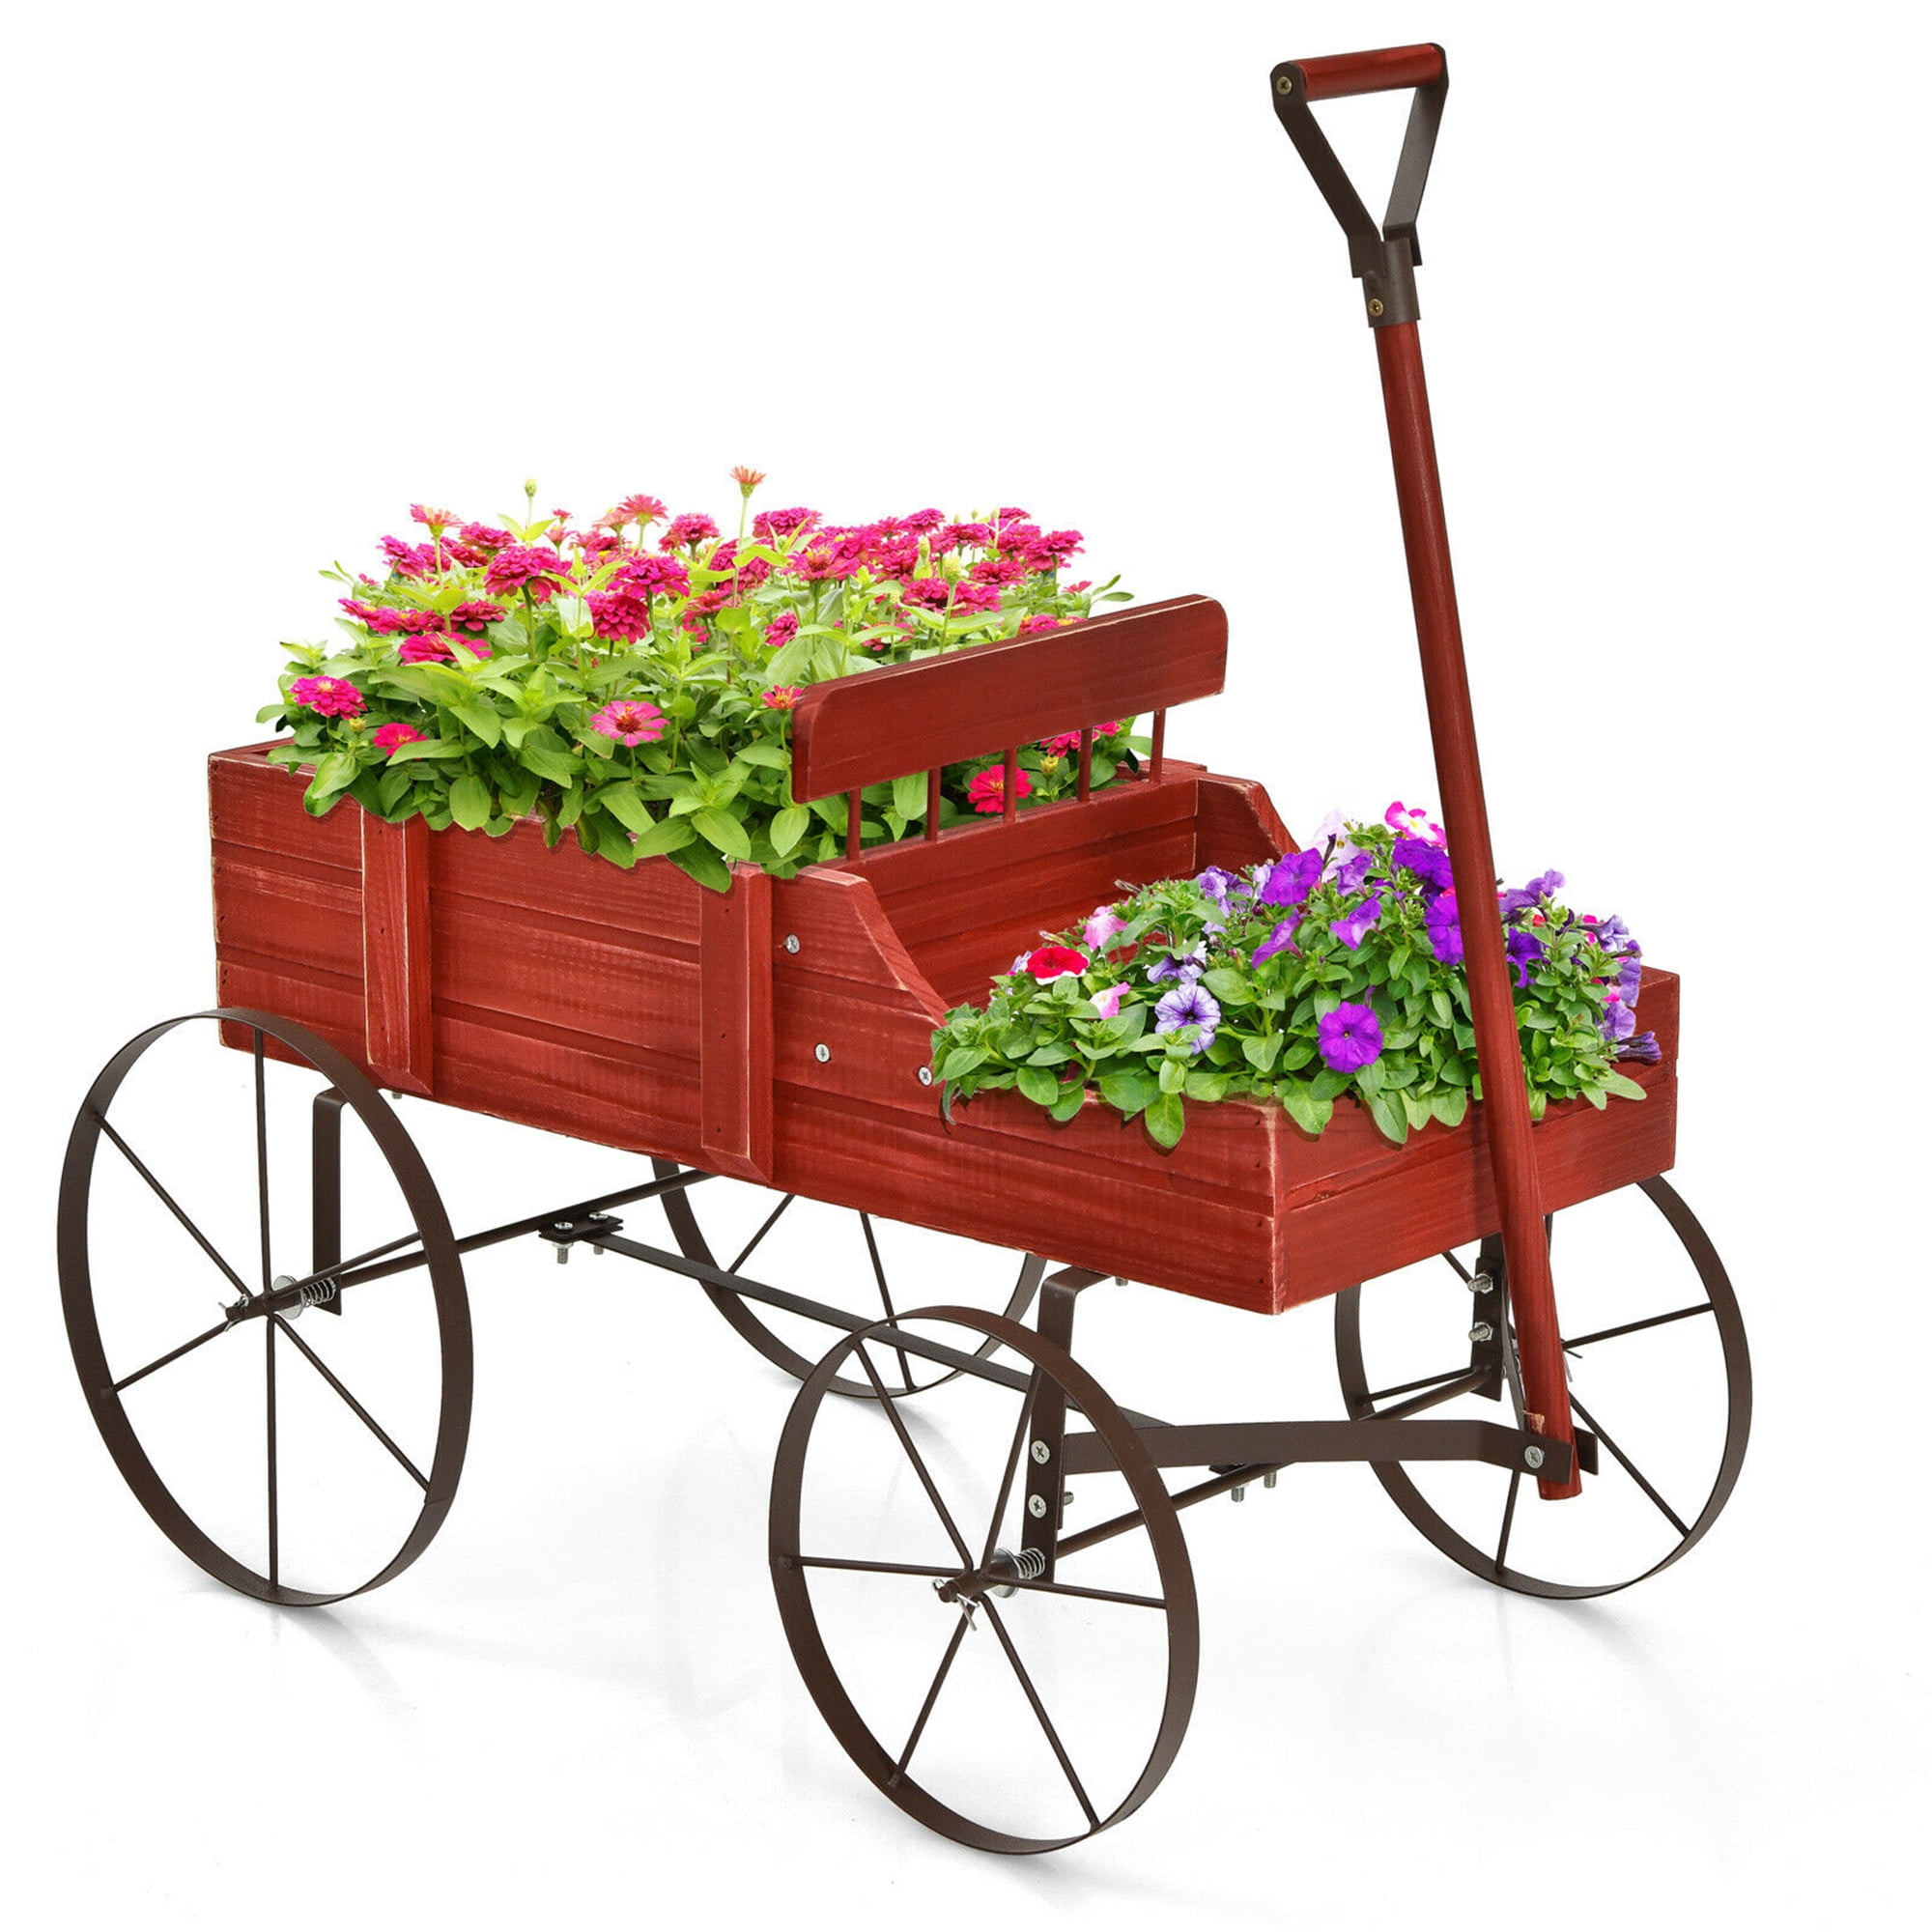 Wood Wagon Wheel Planter Bed Garden Flower Pot Cart Rustic Outdoor Red Stand NEW 